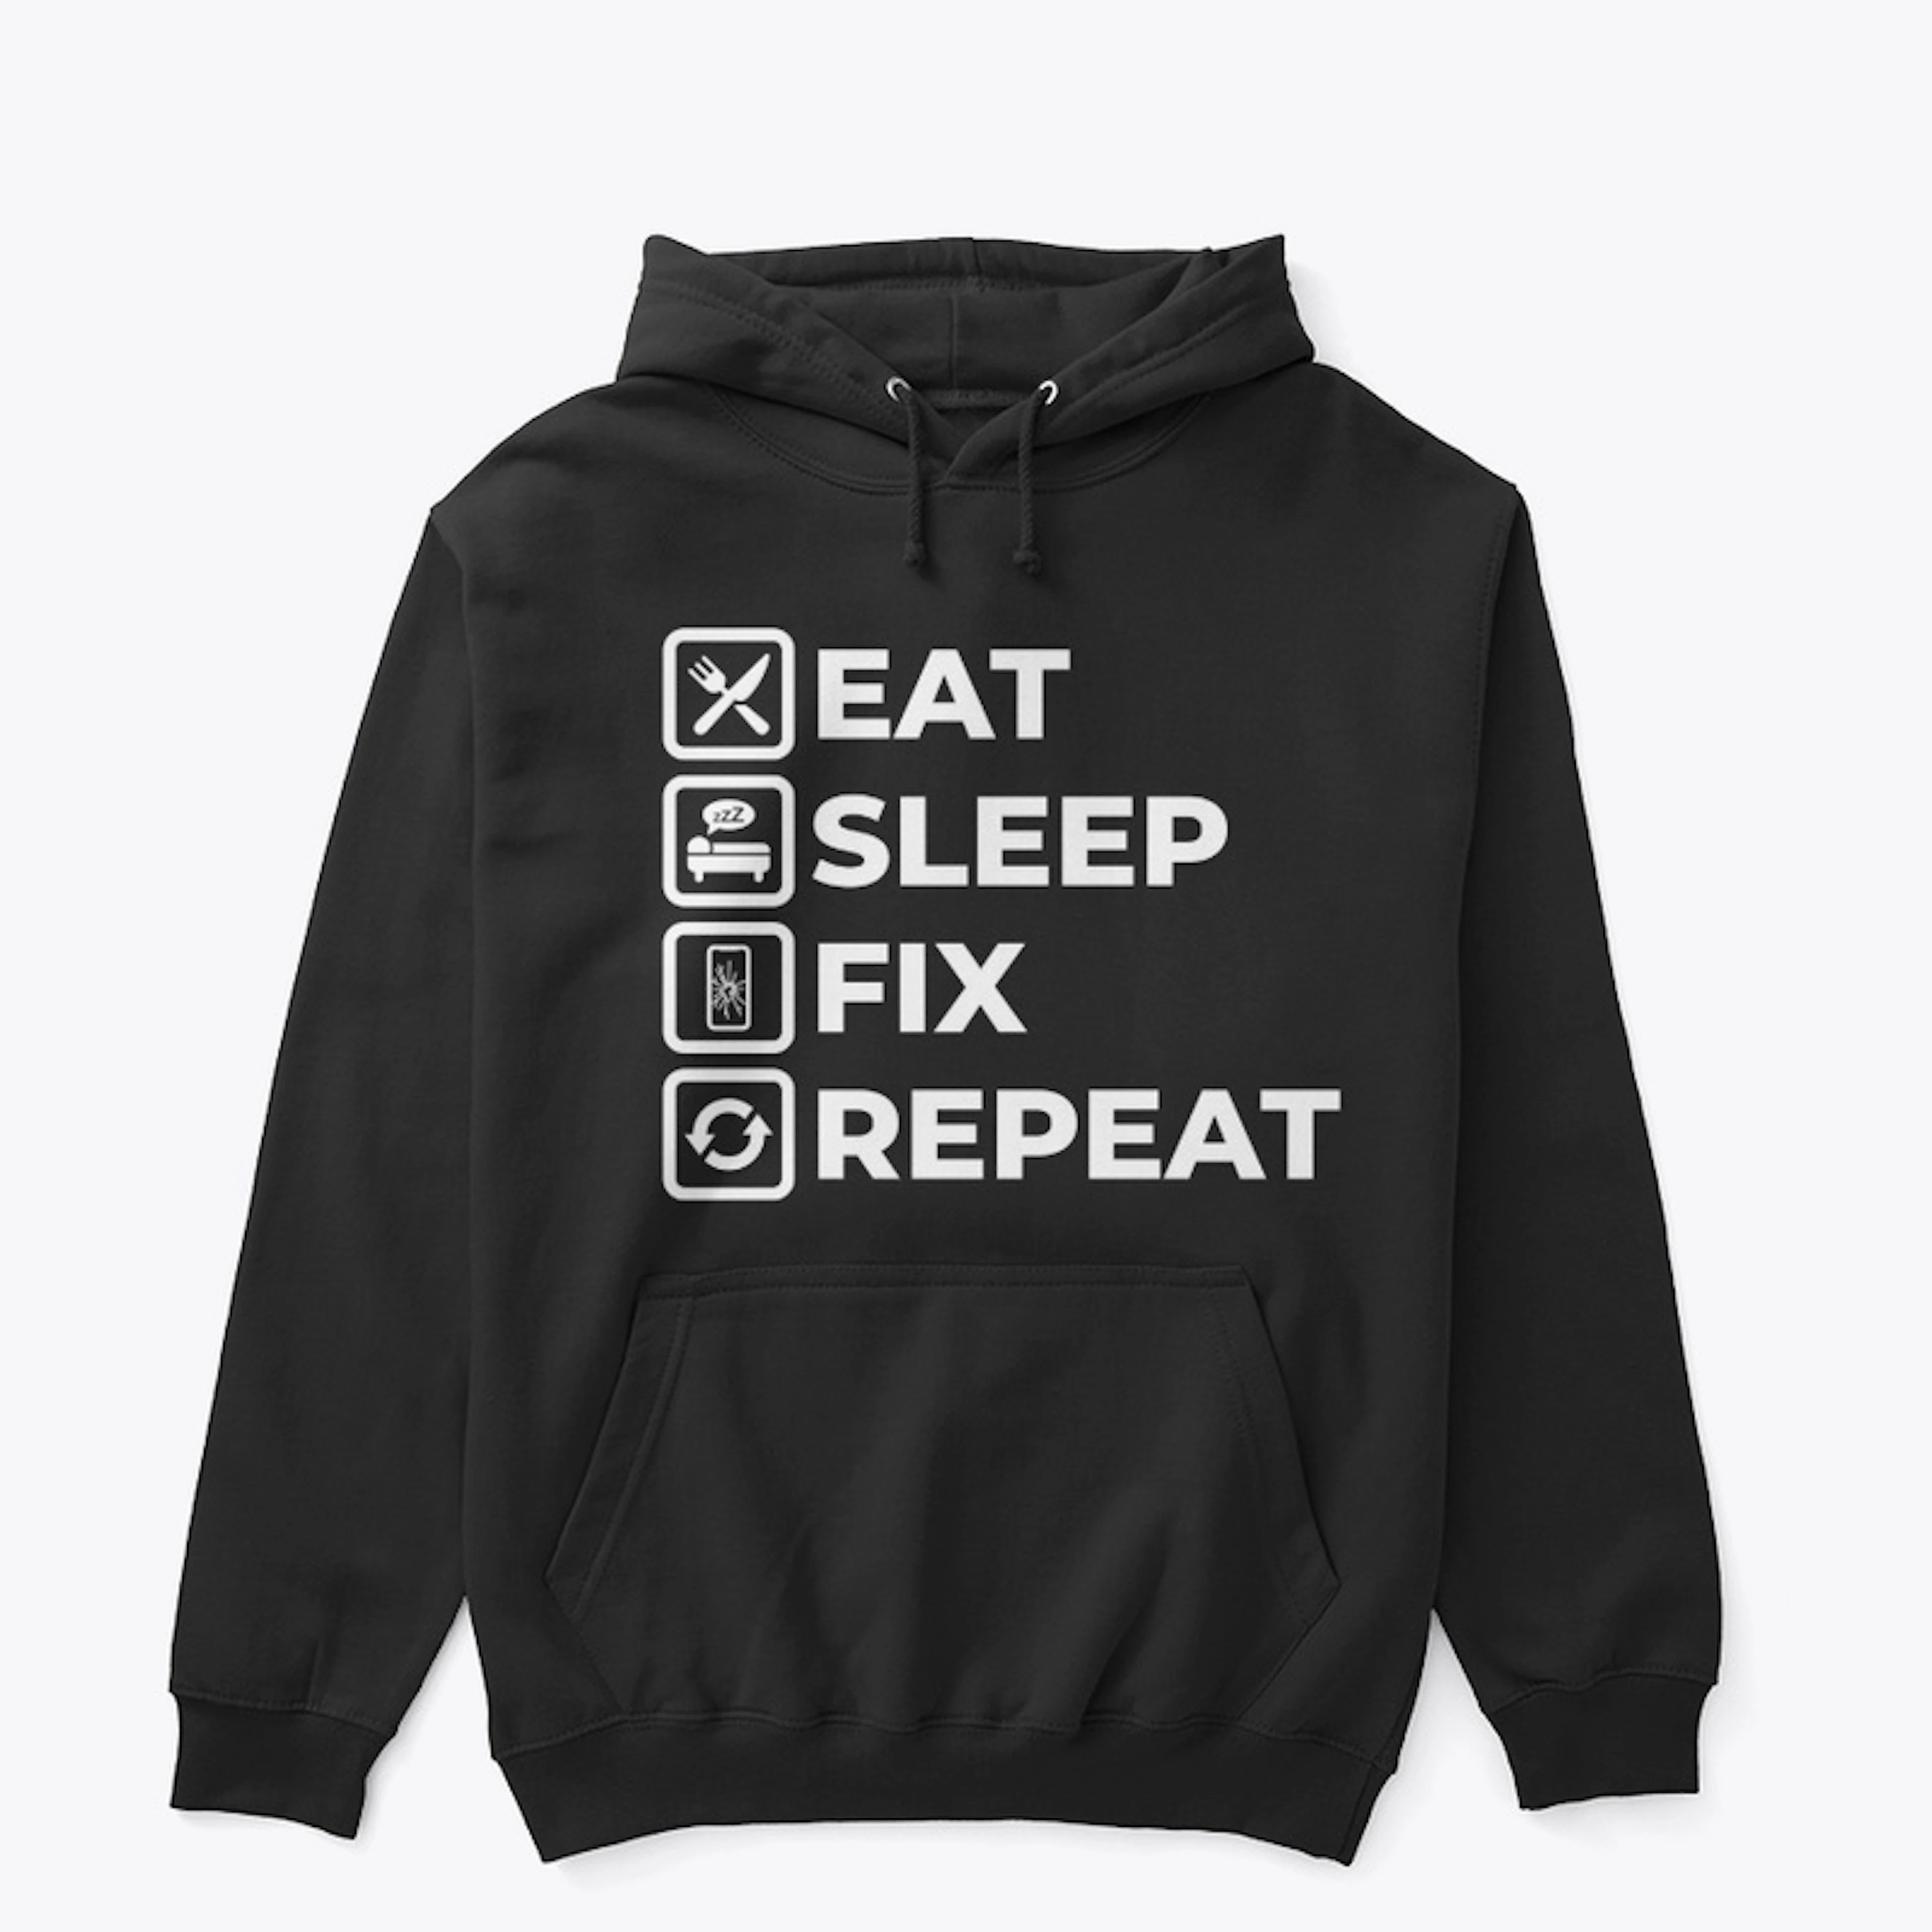 Eat, Sleep, Fix, Repeat